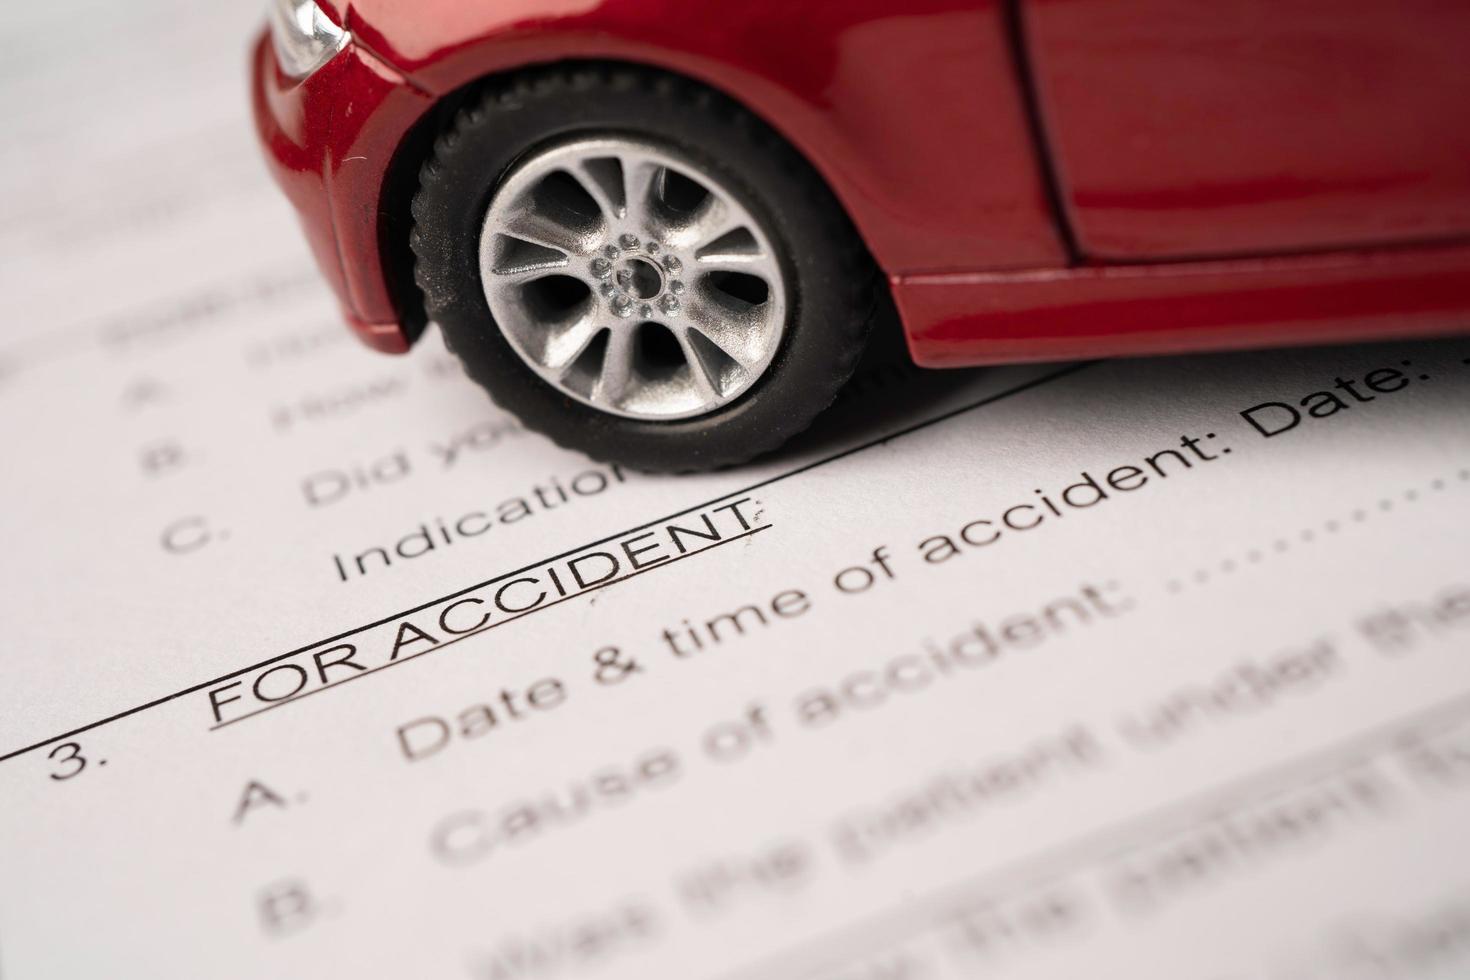 Stethoscope on Insurance claim accident car form, Car loan photo